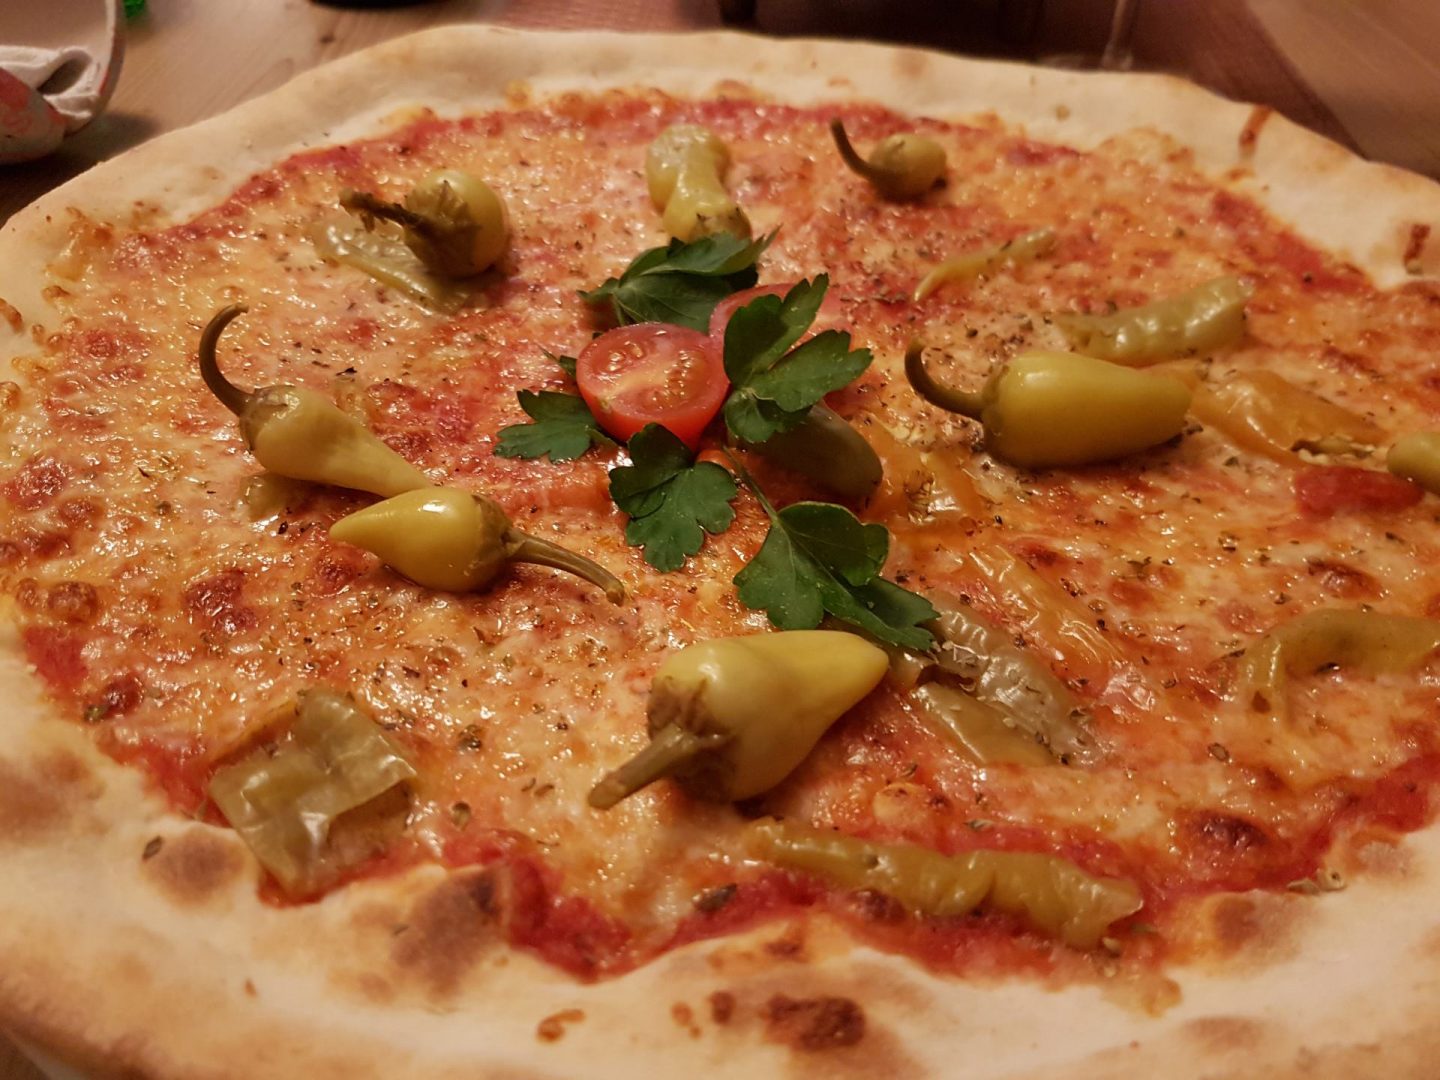 Erfahrung Bewertung Kritik Pizzeria Palas Reith im Alpbachtal Skijuwel Foodblog Sternestulle